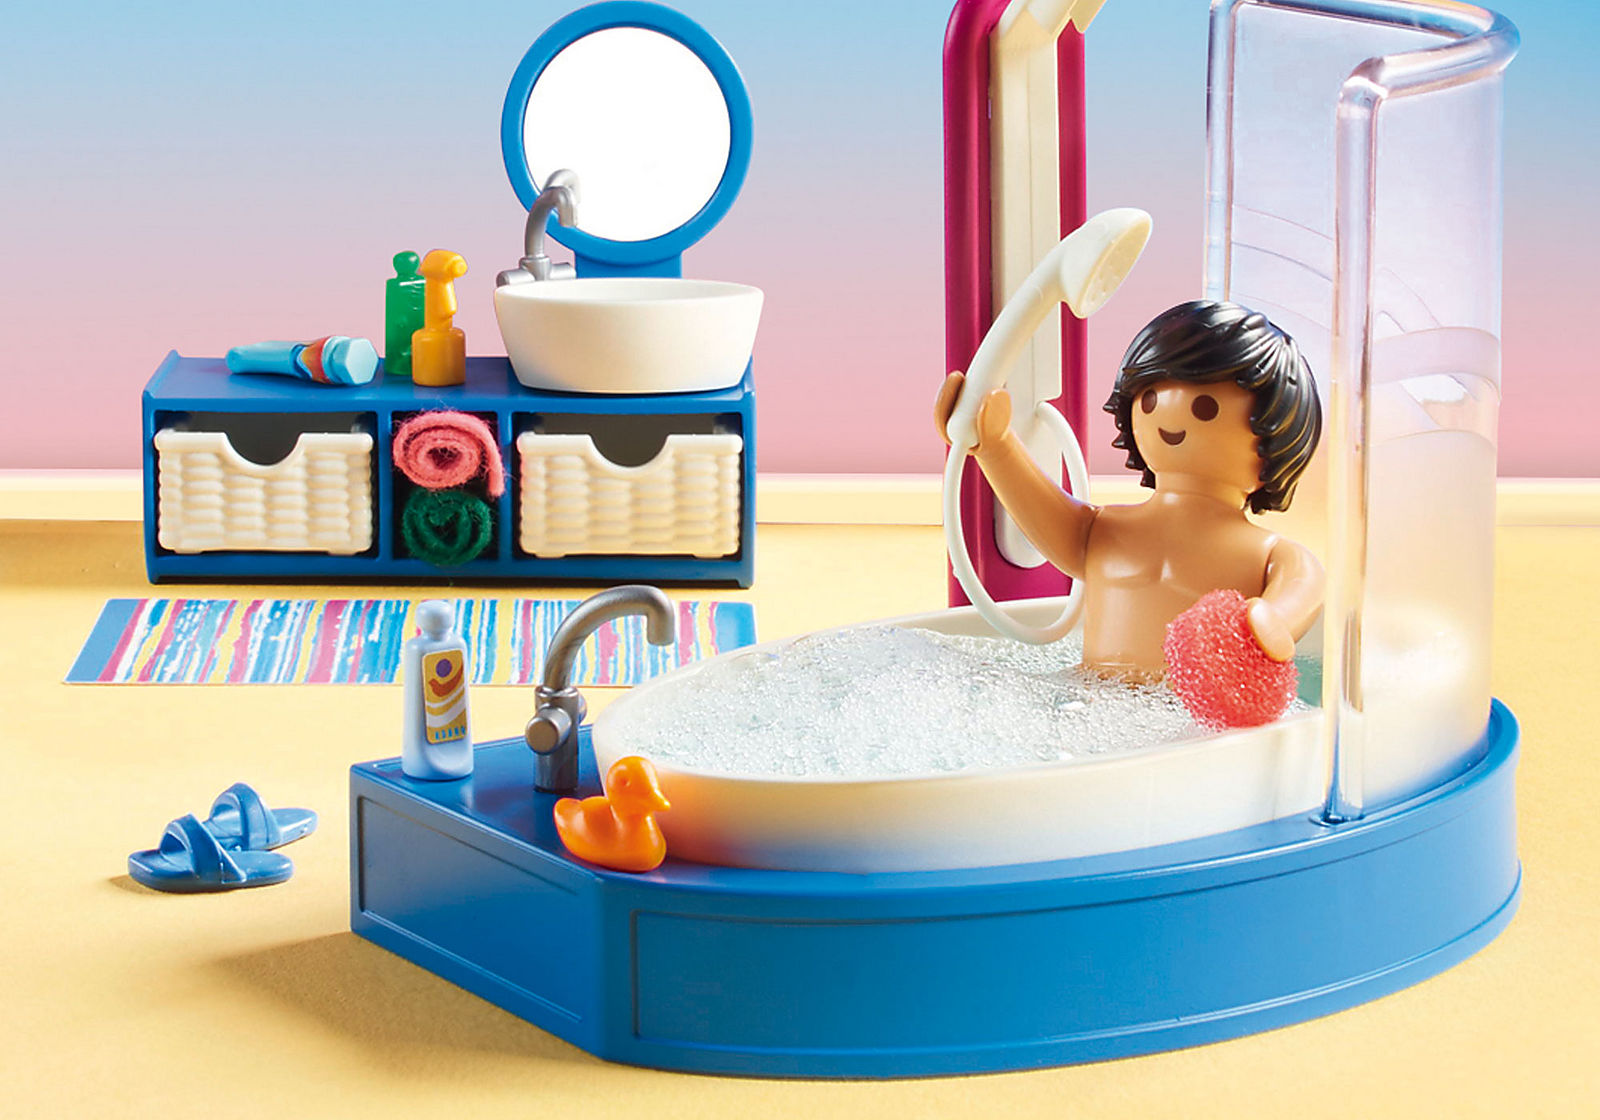 Playmobil dolhouse bagno con vasca - 